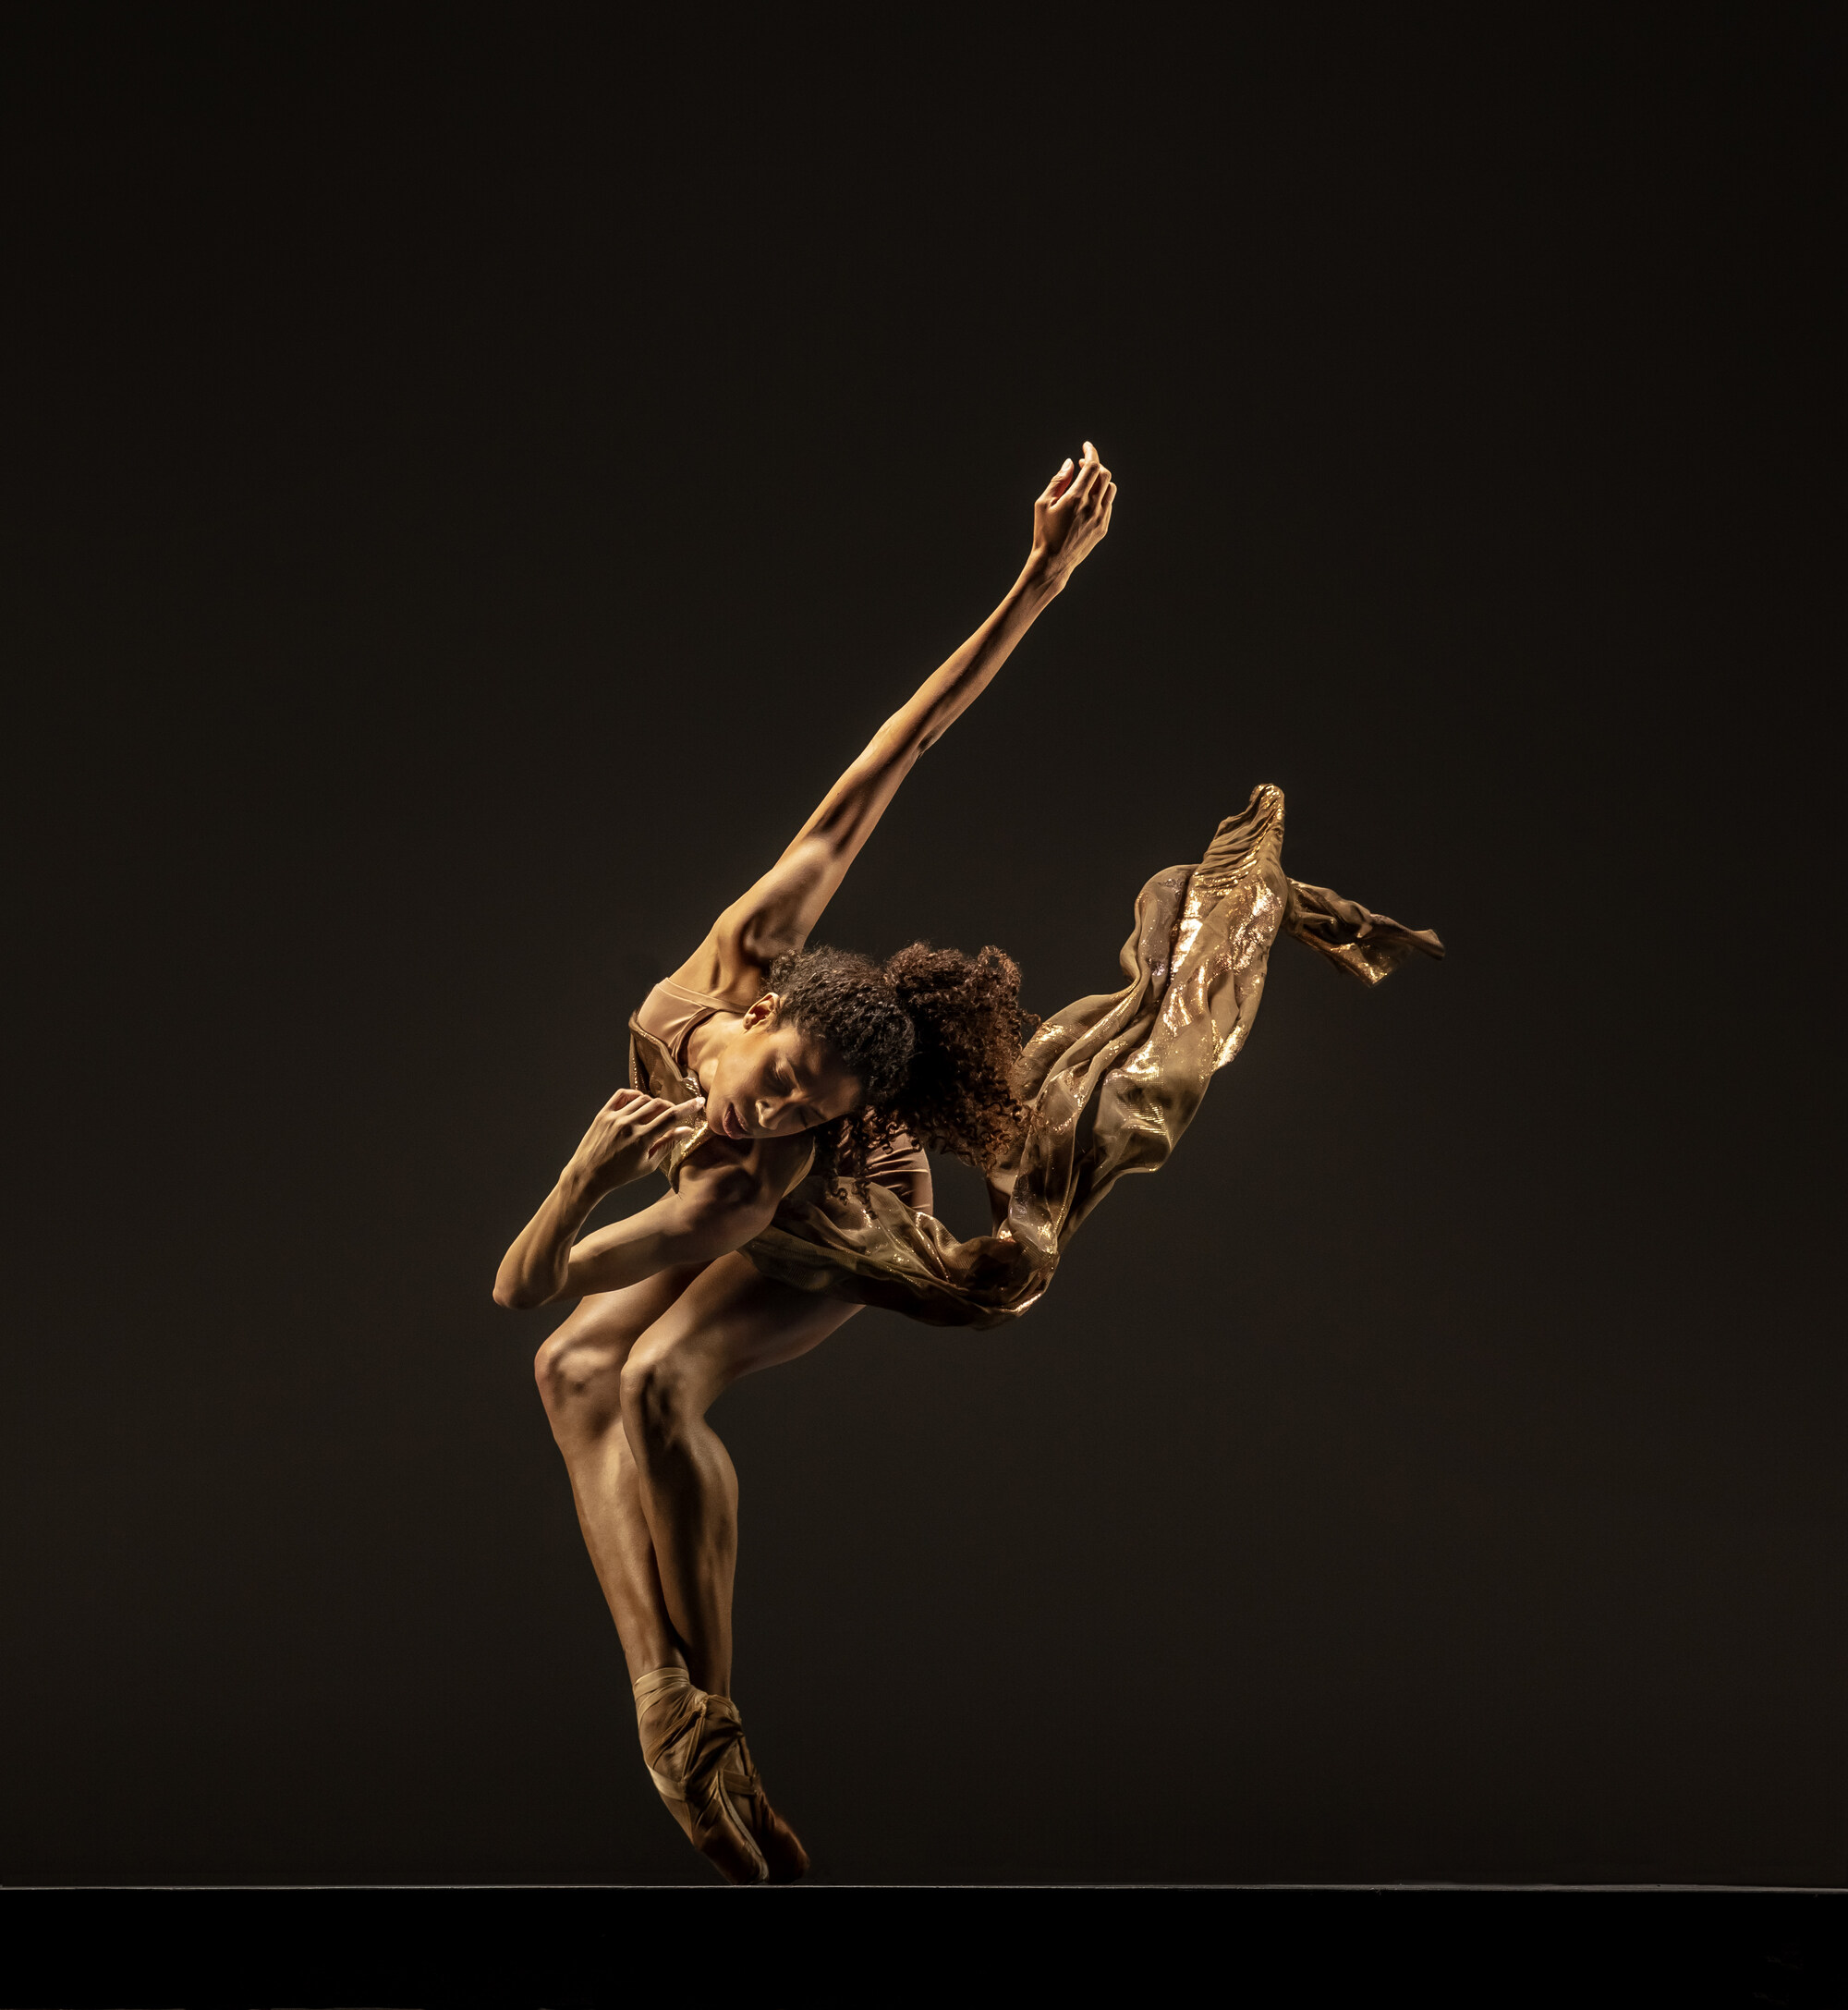 image of ballet dancer mid dance move